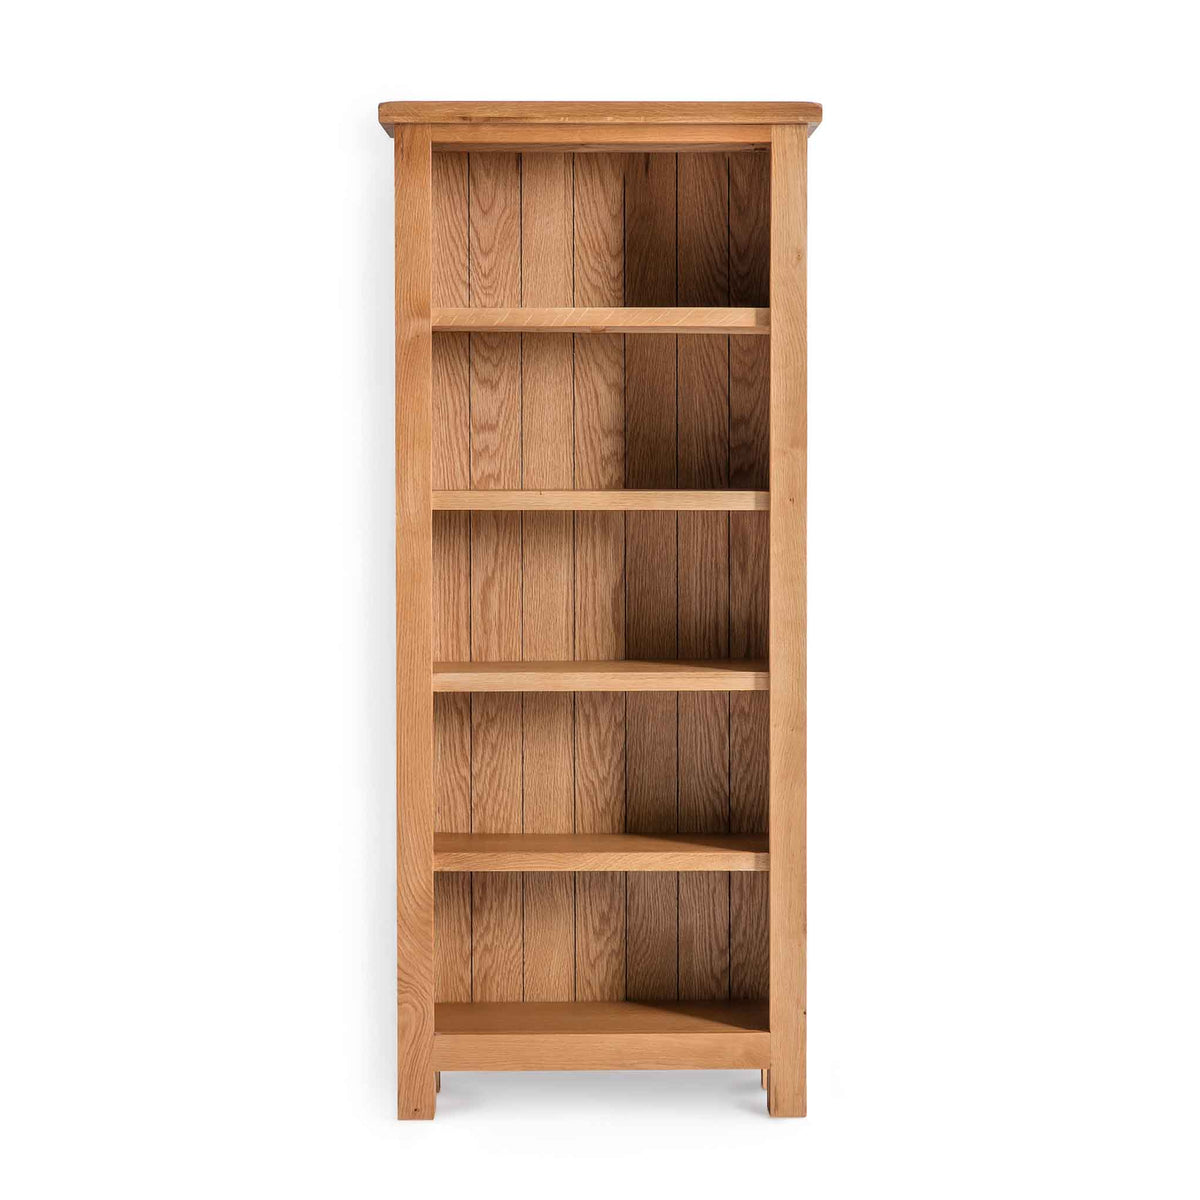 Surrey Oak Slim Bookcase by Roseland Furniture